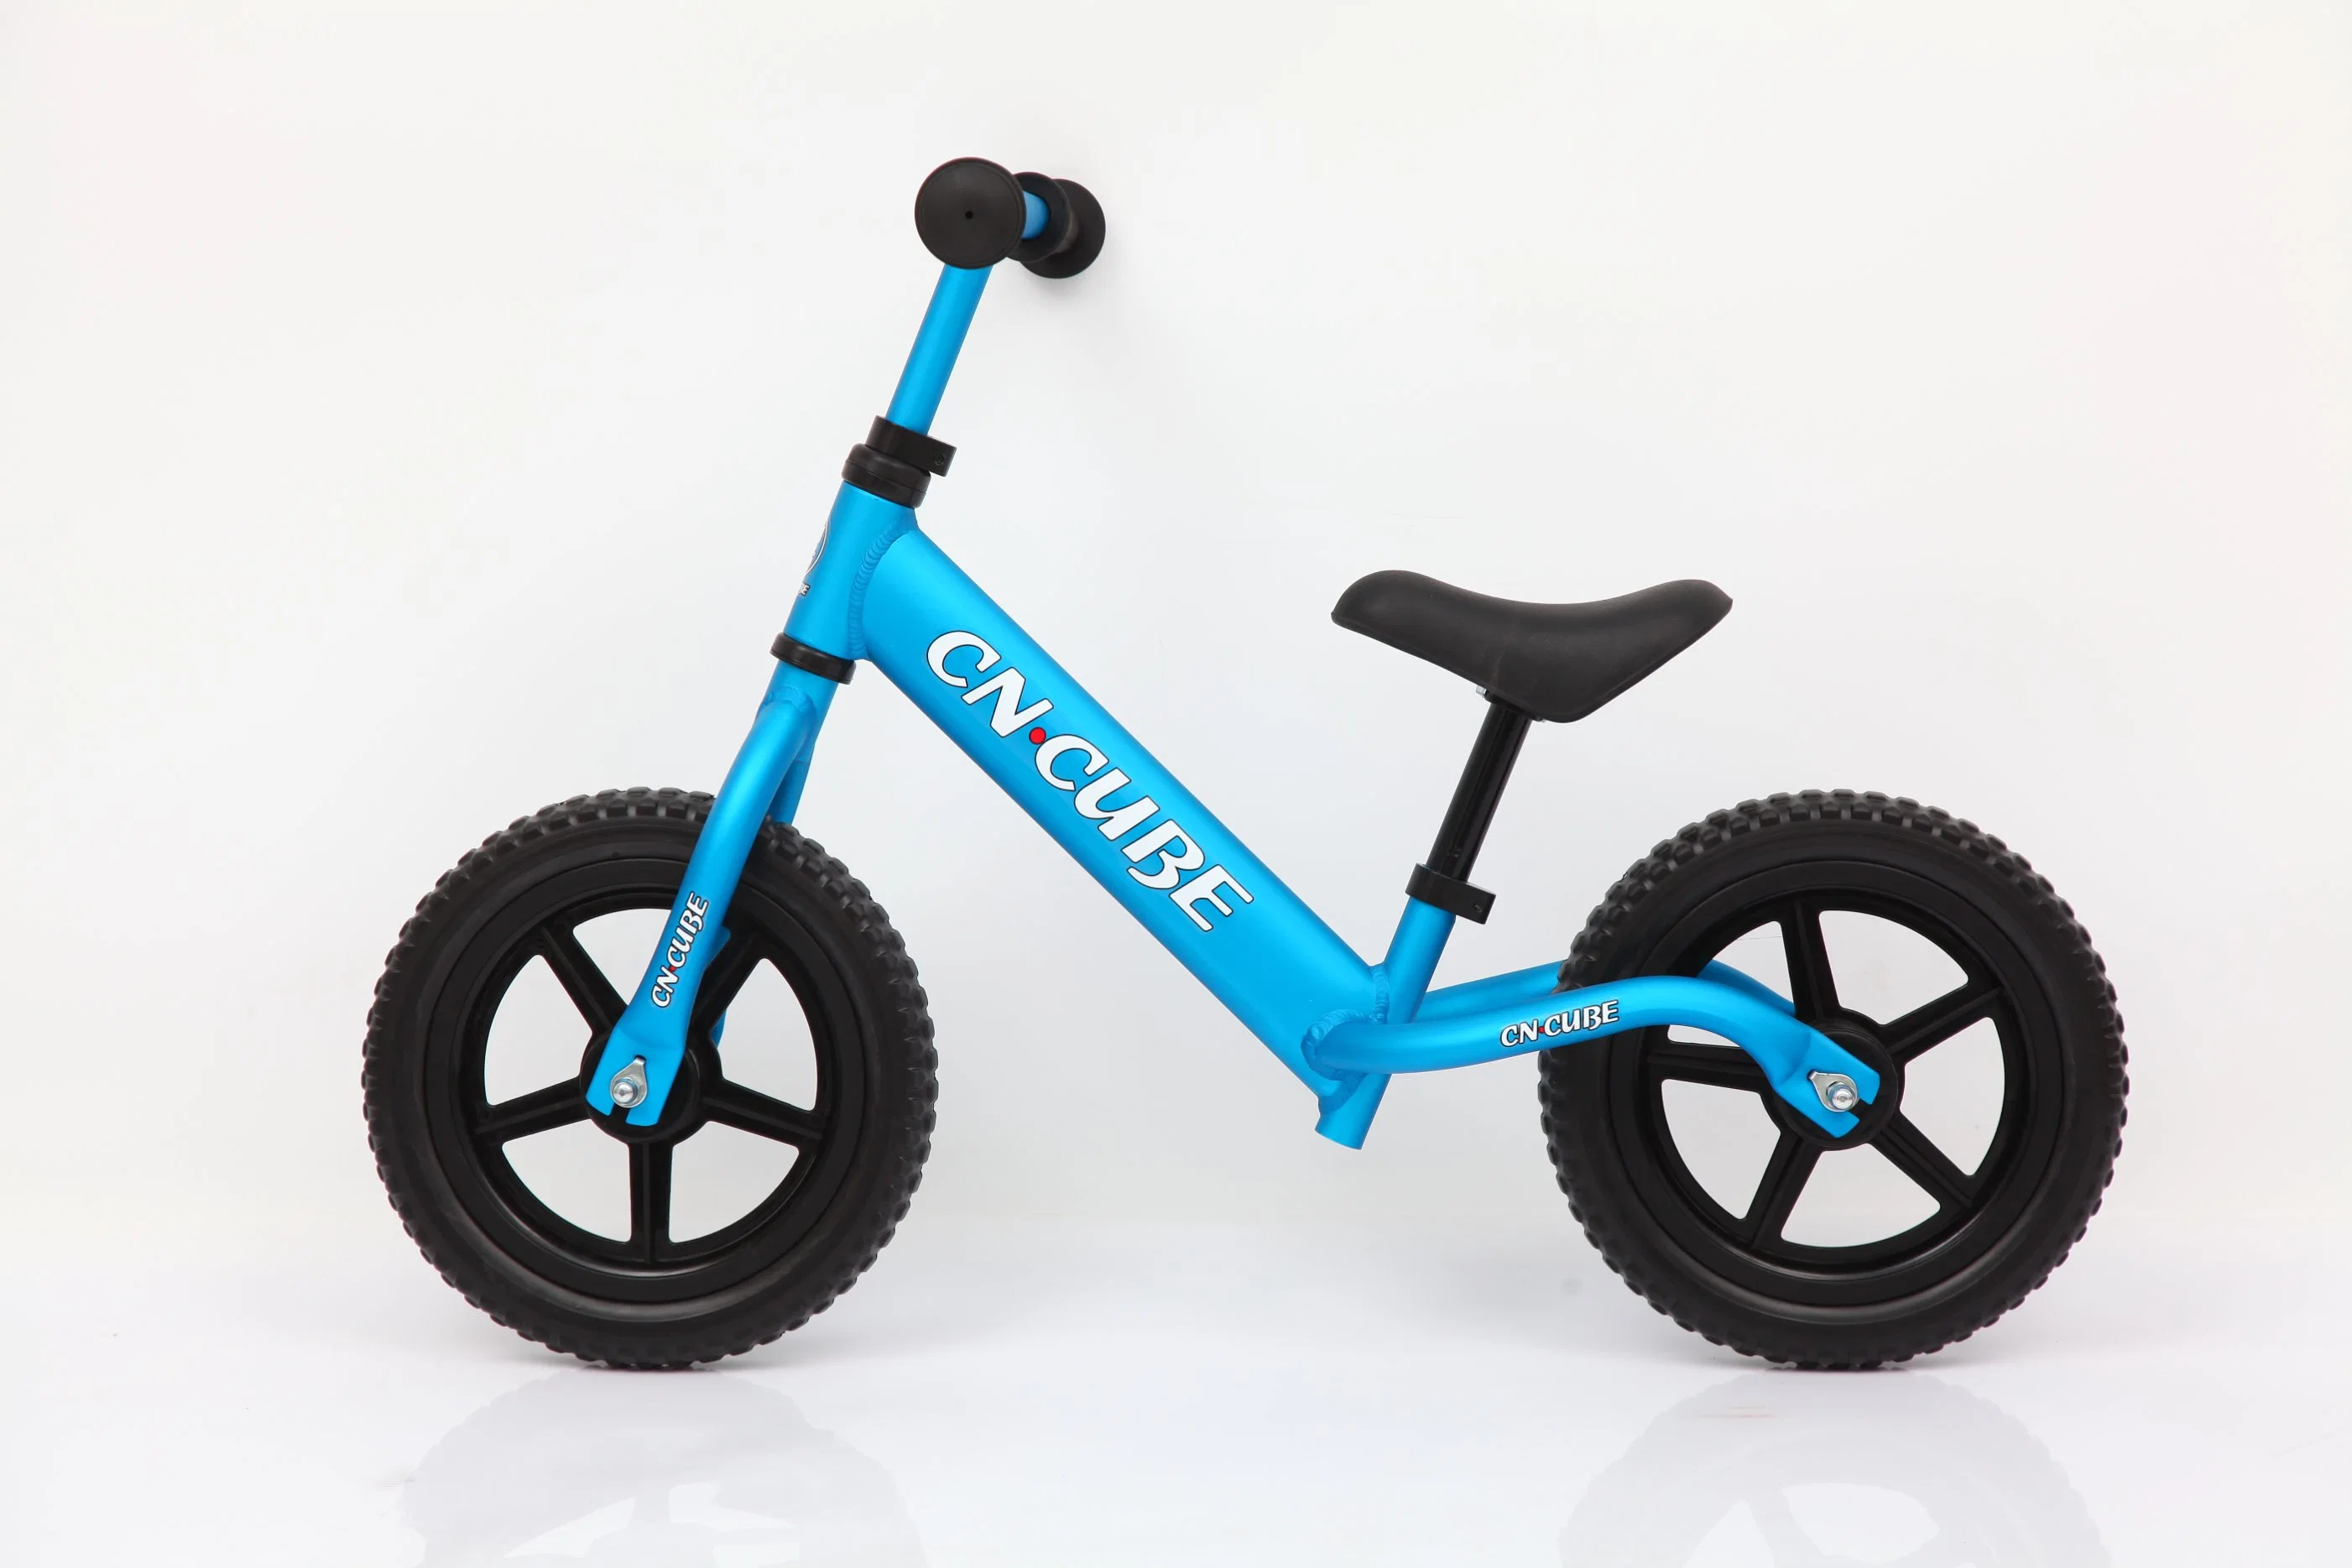 Factory New Arrival Super Light 12 Inch Kids Balance Bike Aluminium Alloy Frame No Pedal Baby Bike